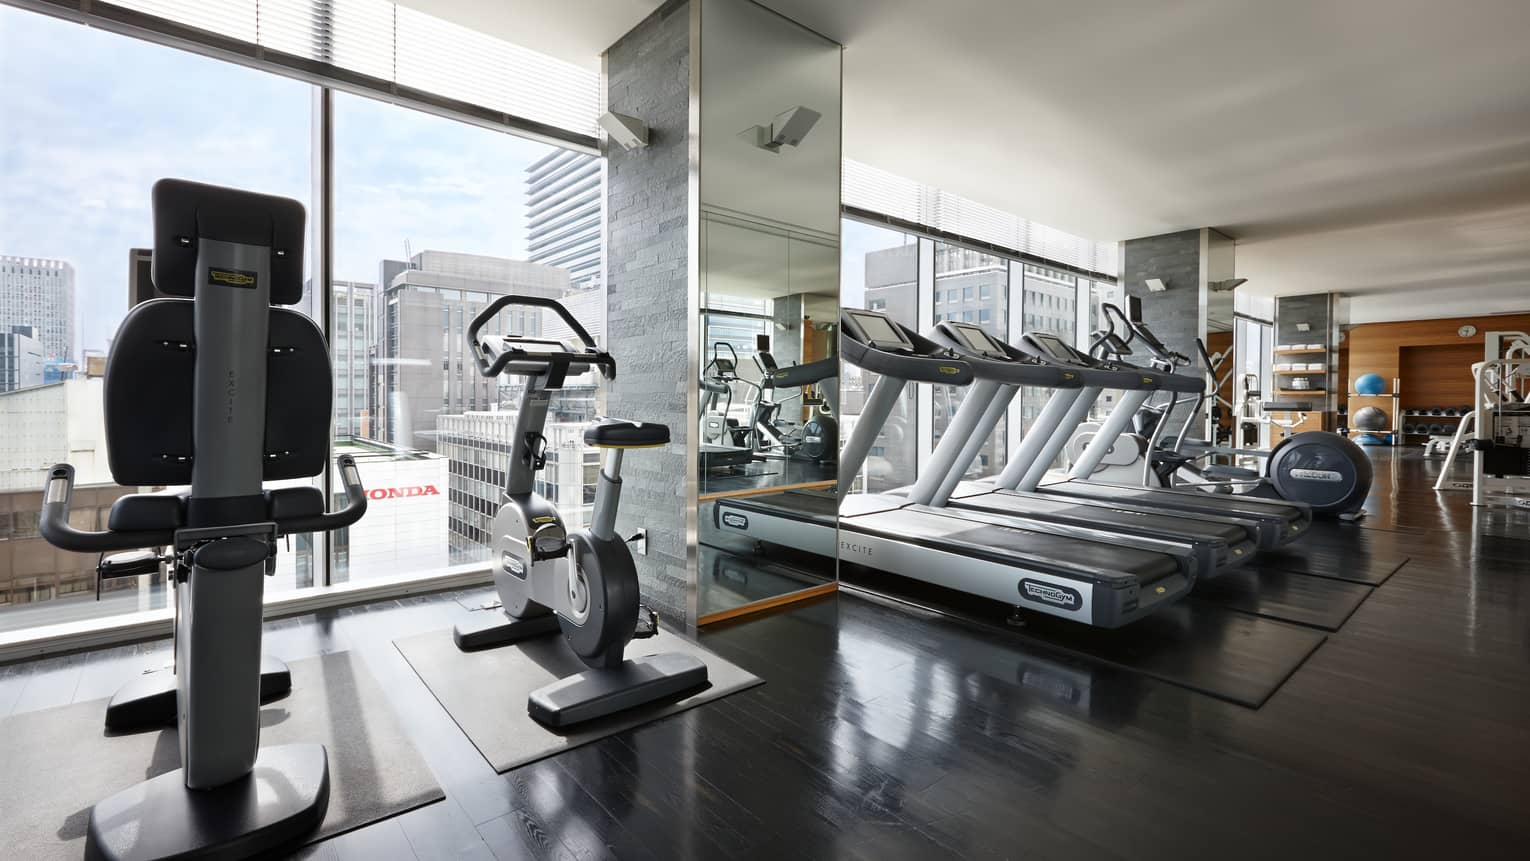 Elliptical machines, treadmills, cardio equipment by sunny window in Fitness Centre